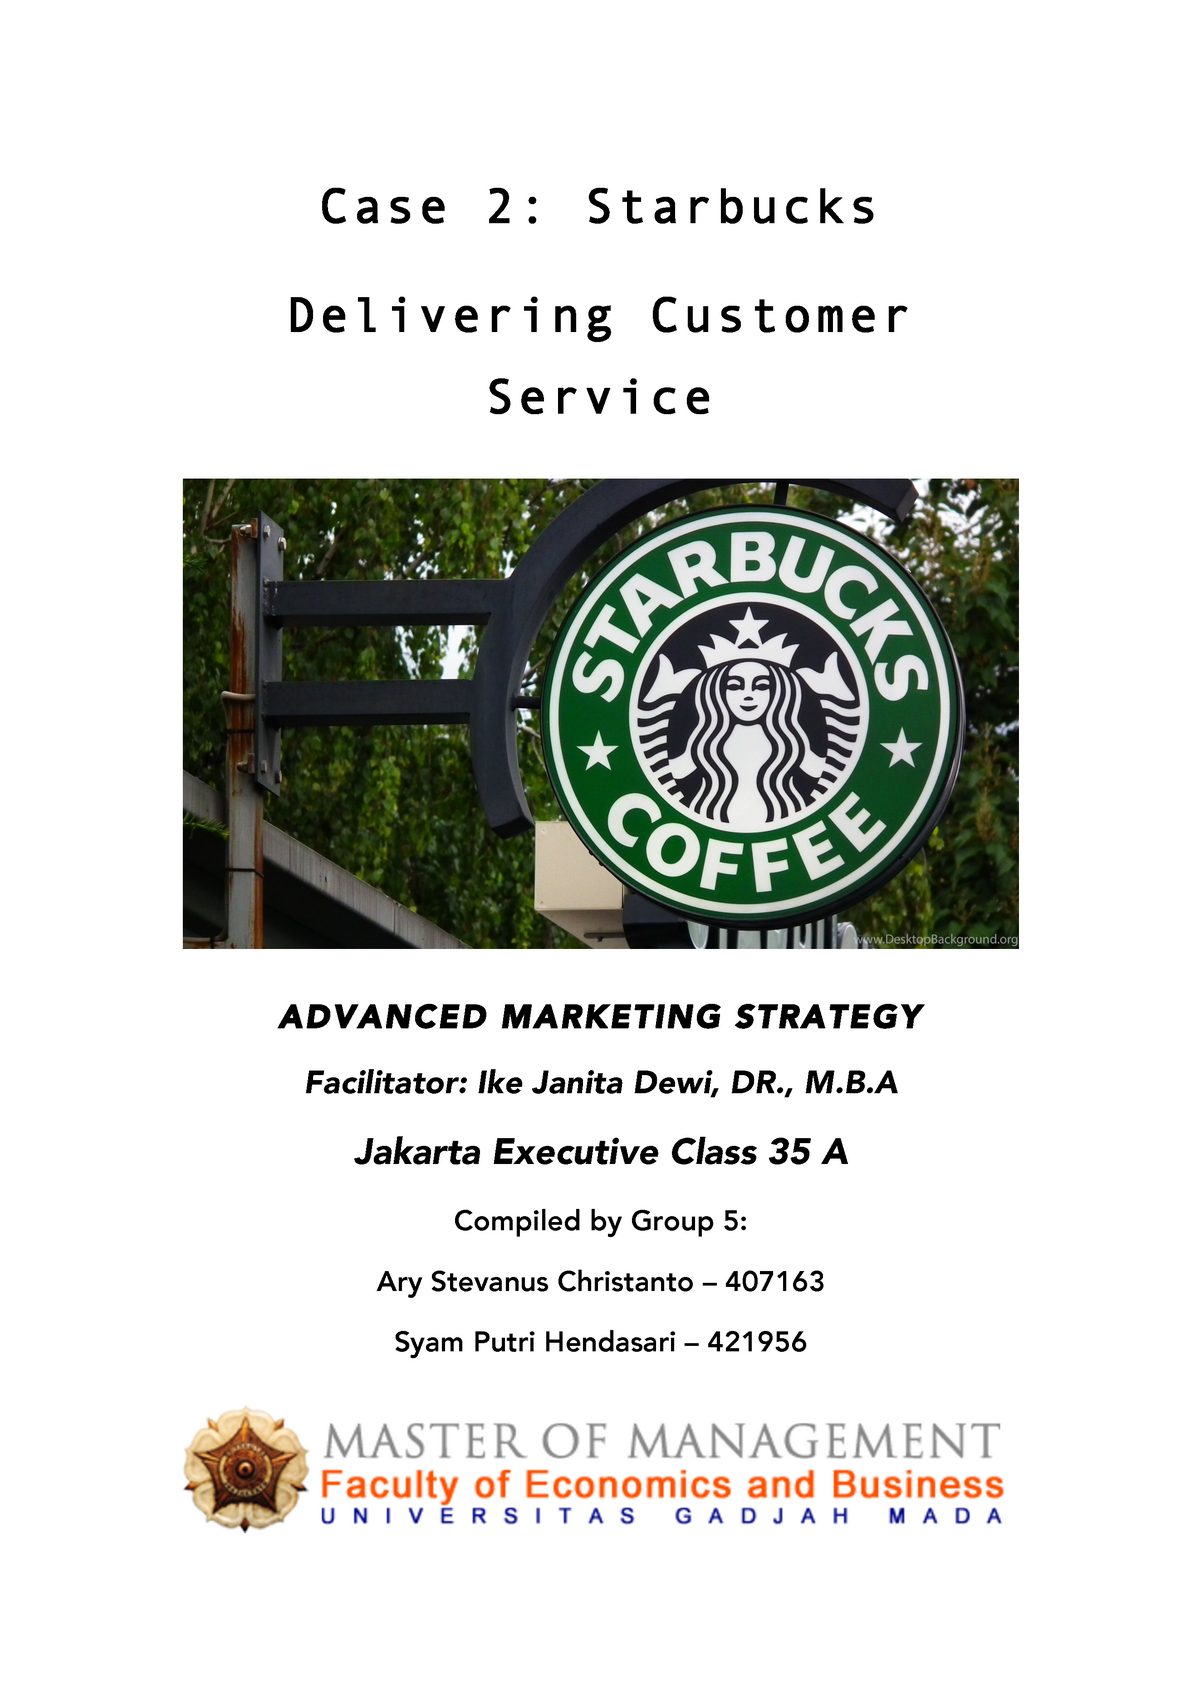 starbucks delivering customer service case study analysis